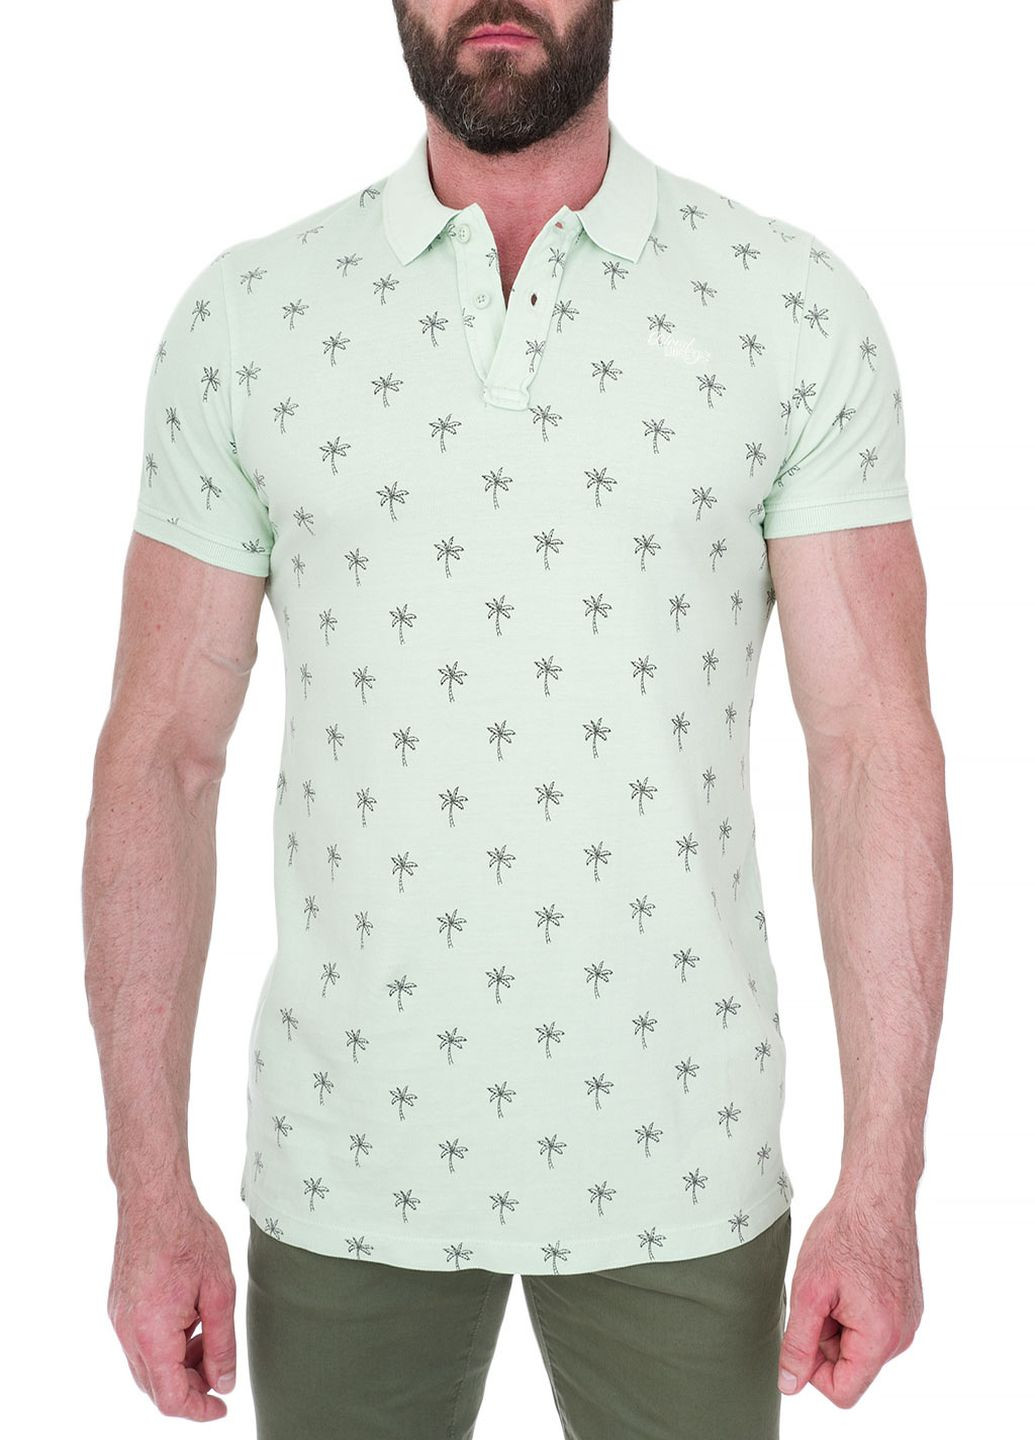 Салатовая футболка-поло для мужчин Blend